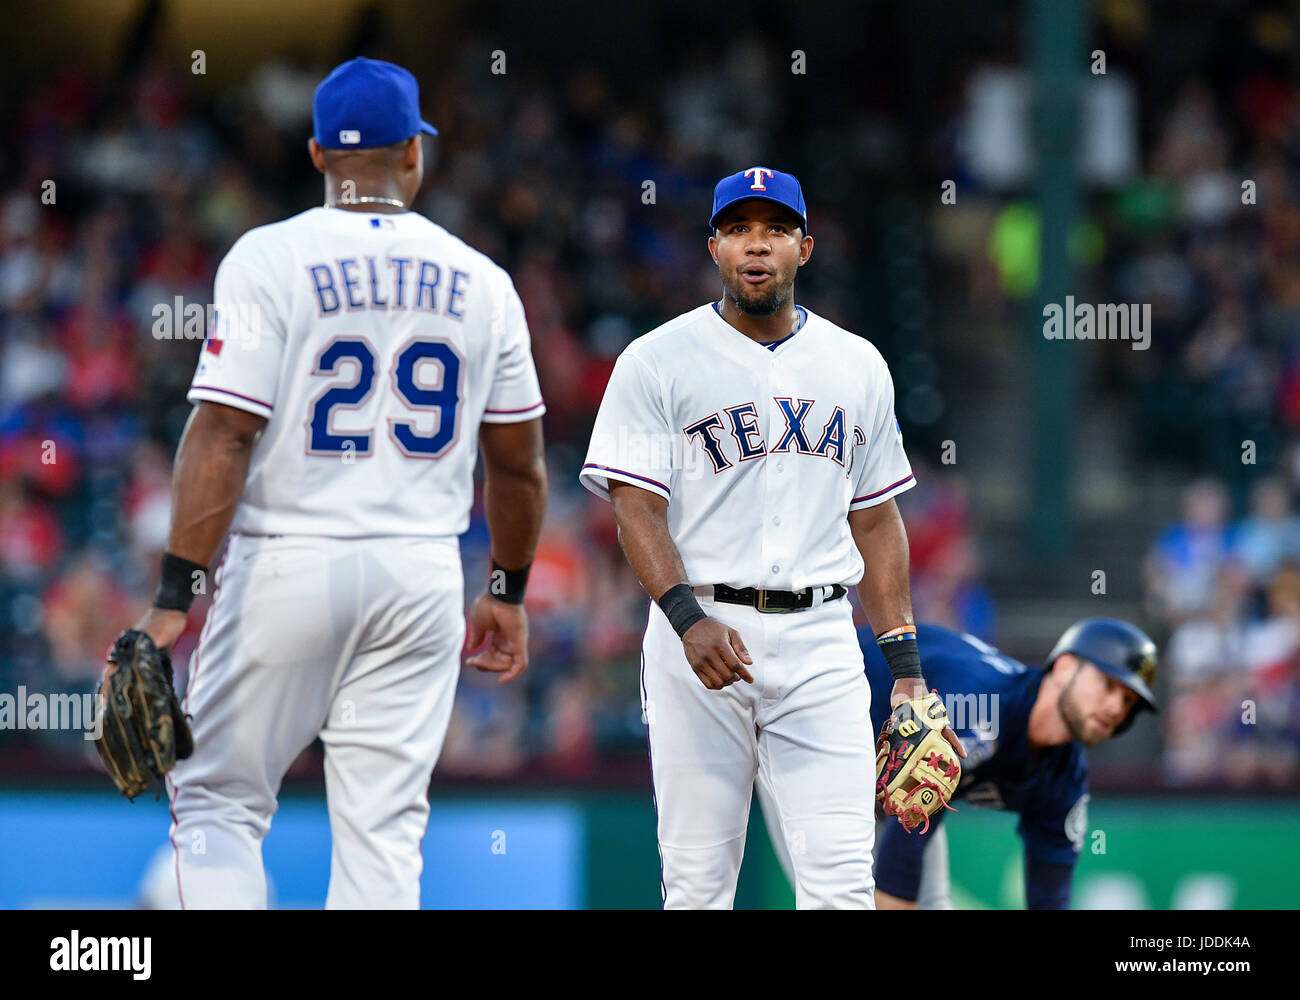 June 23, 2019: Texas Rangers shortstop Elvis Andrus #1 forces out